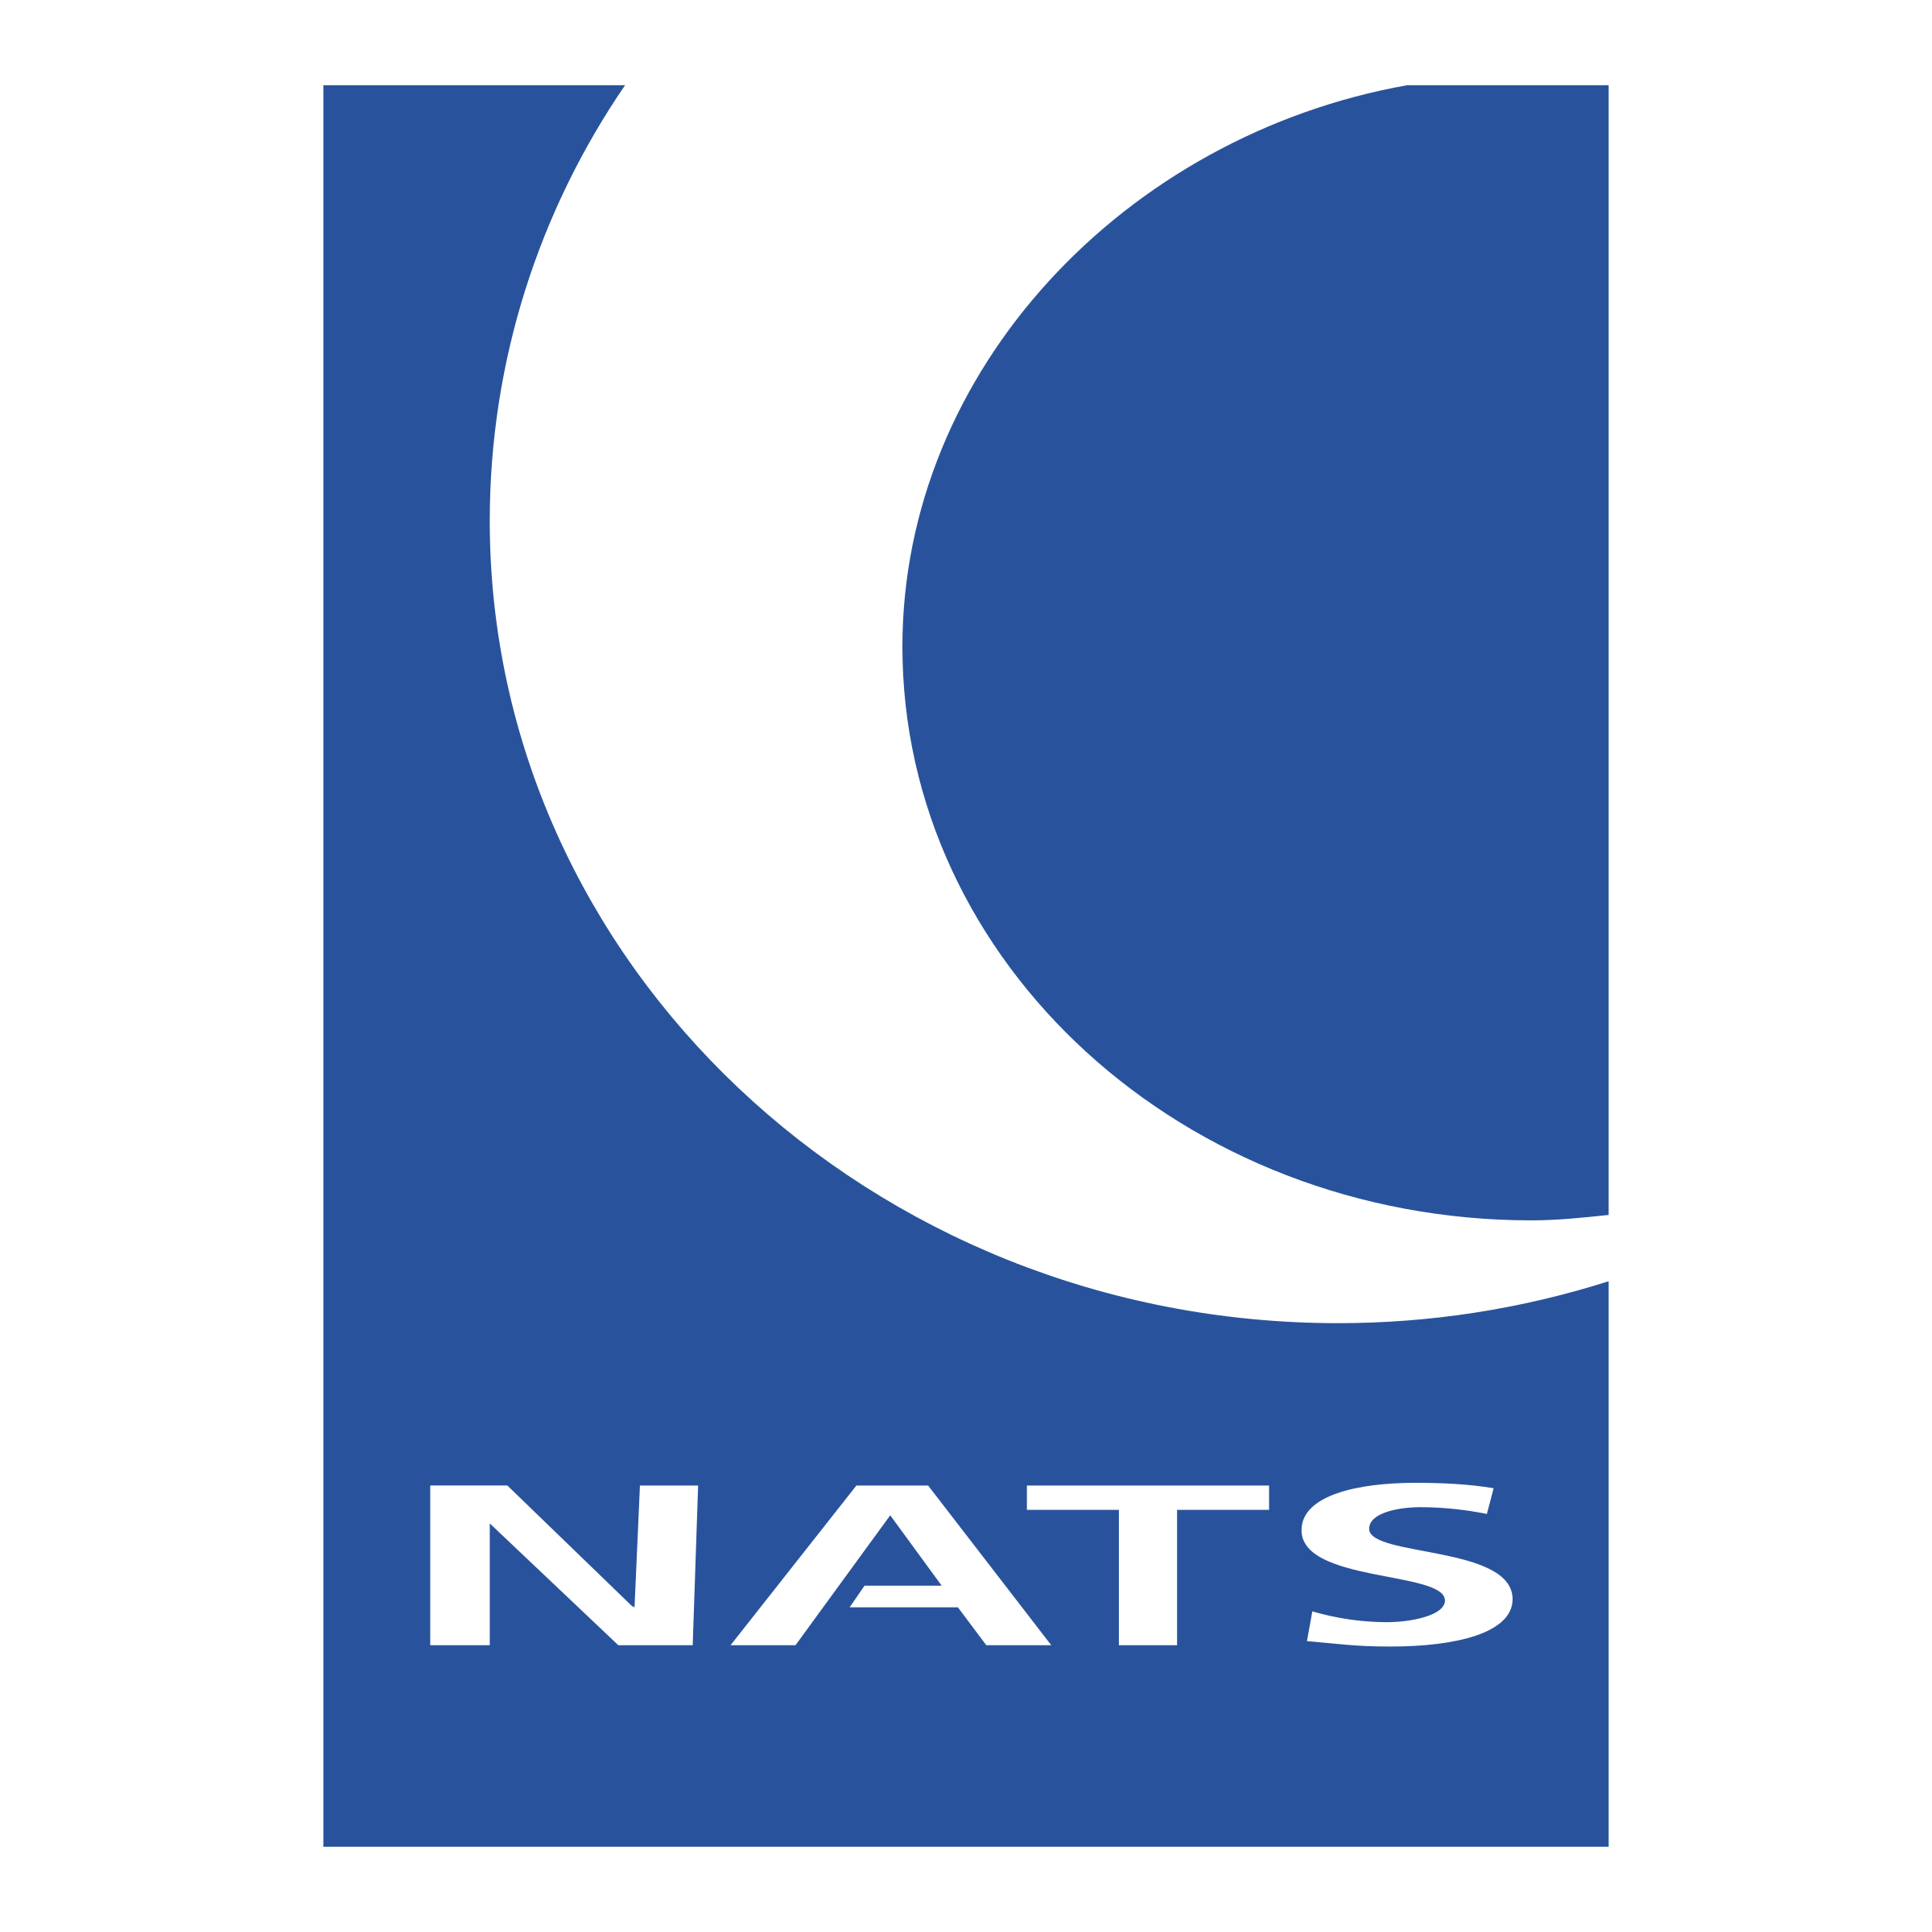 Nats Logo - NATS Logo PNG Transparent & SVG Vector - Freebie Supply